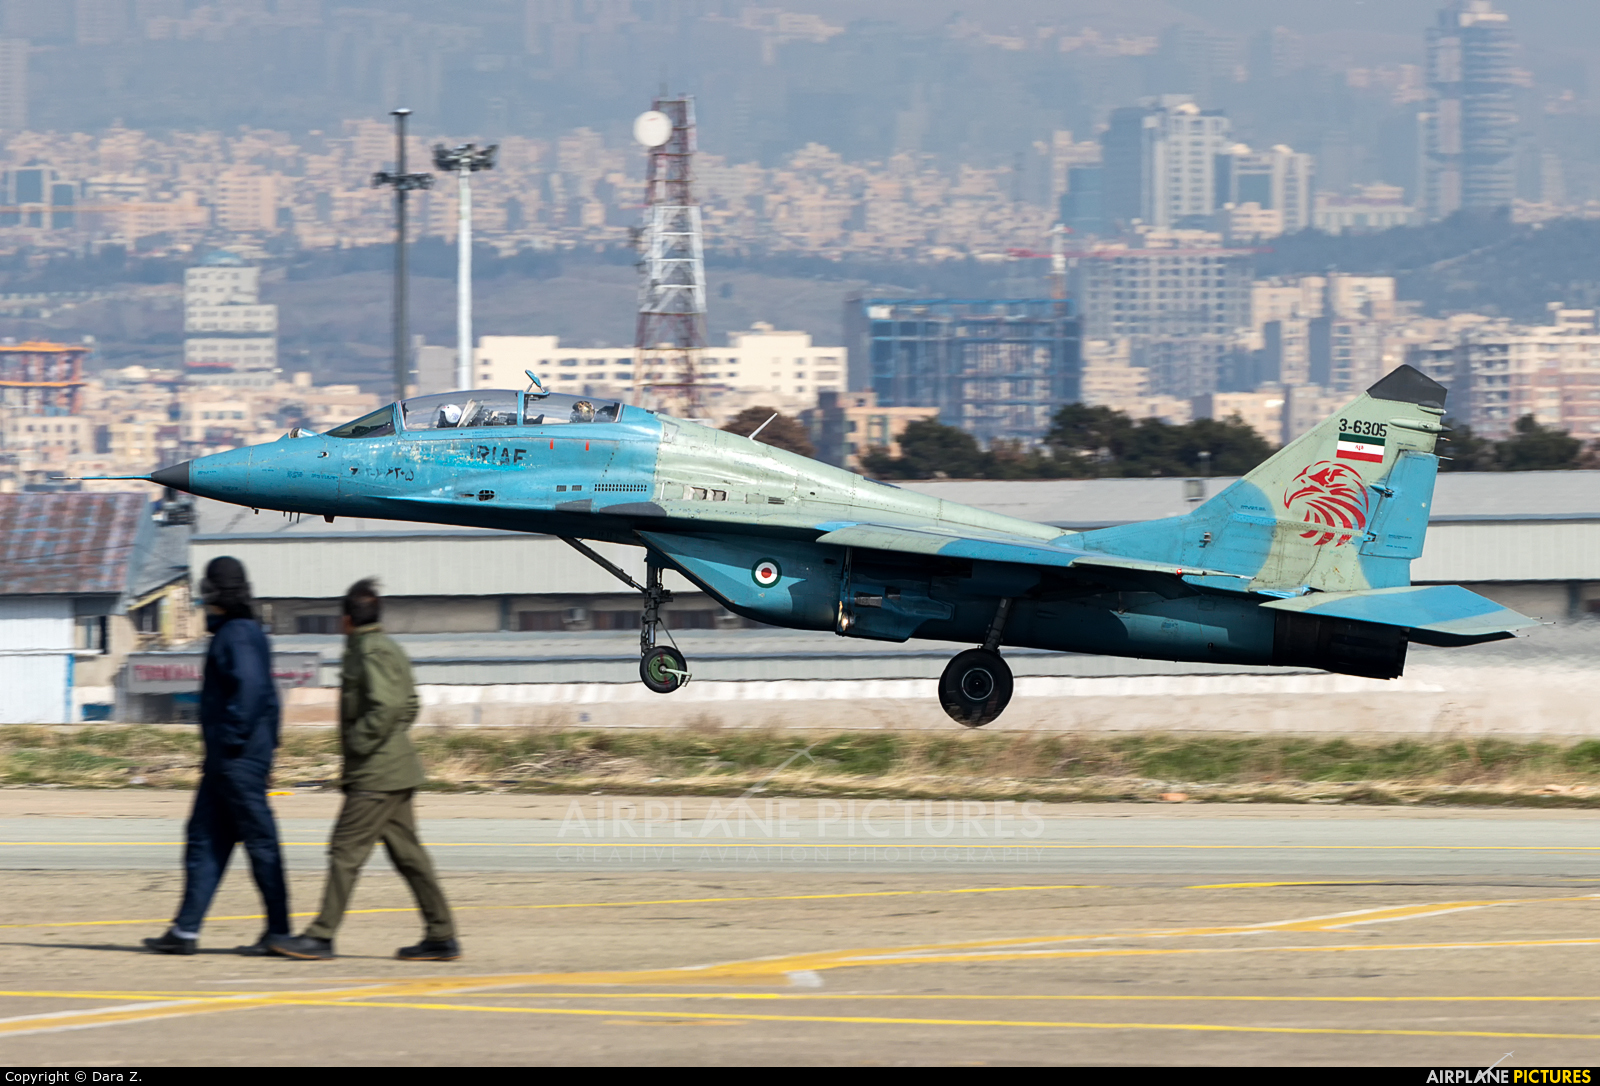 Iran - Islamic Republic Air Force 3-6305 aircraft at Tehran - Mehrabad Intl